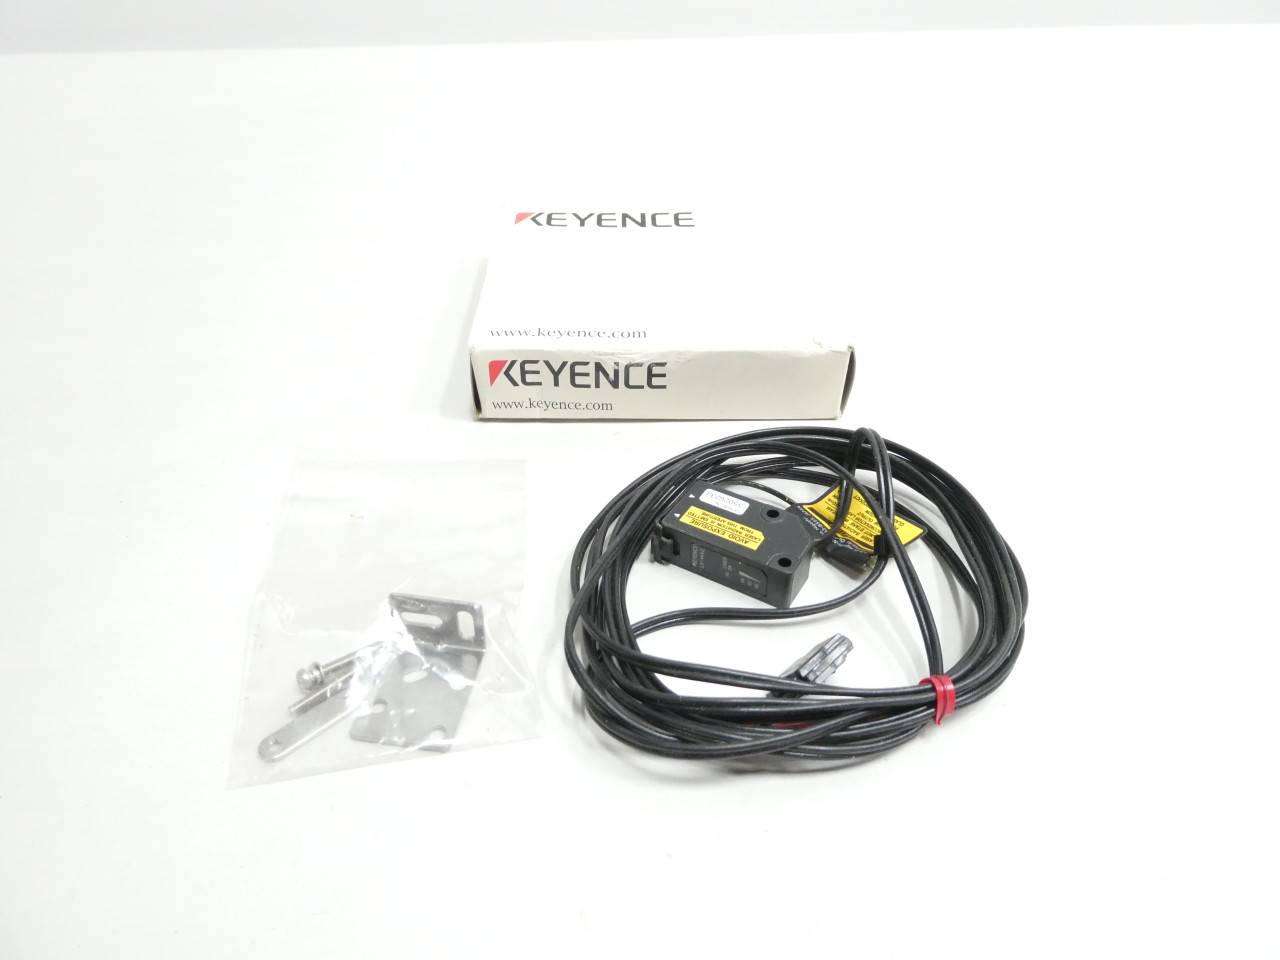 Keyence LV-H42 Digital Laser Sensor, Reflective Head, Area Type